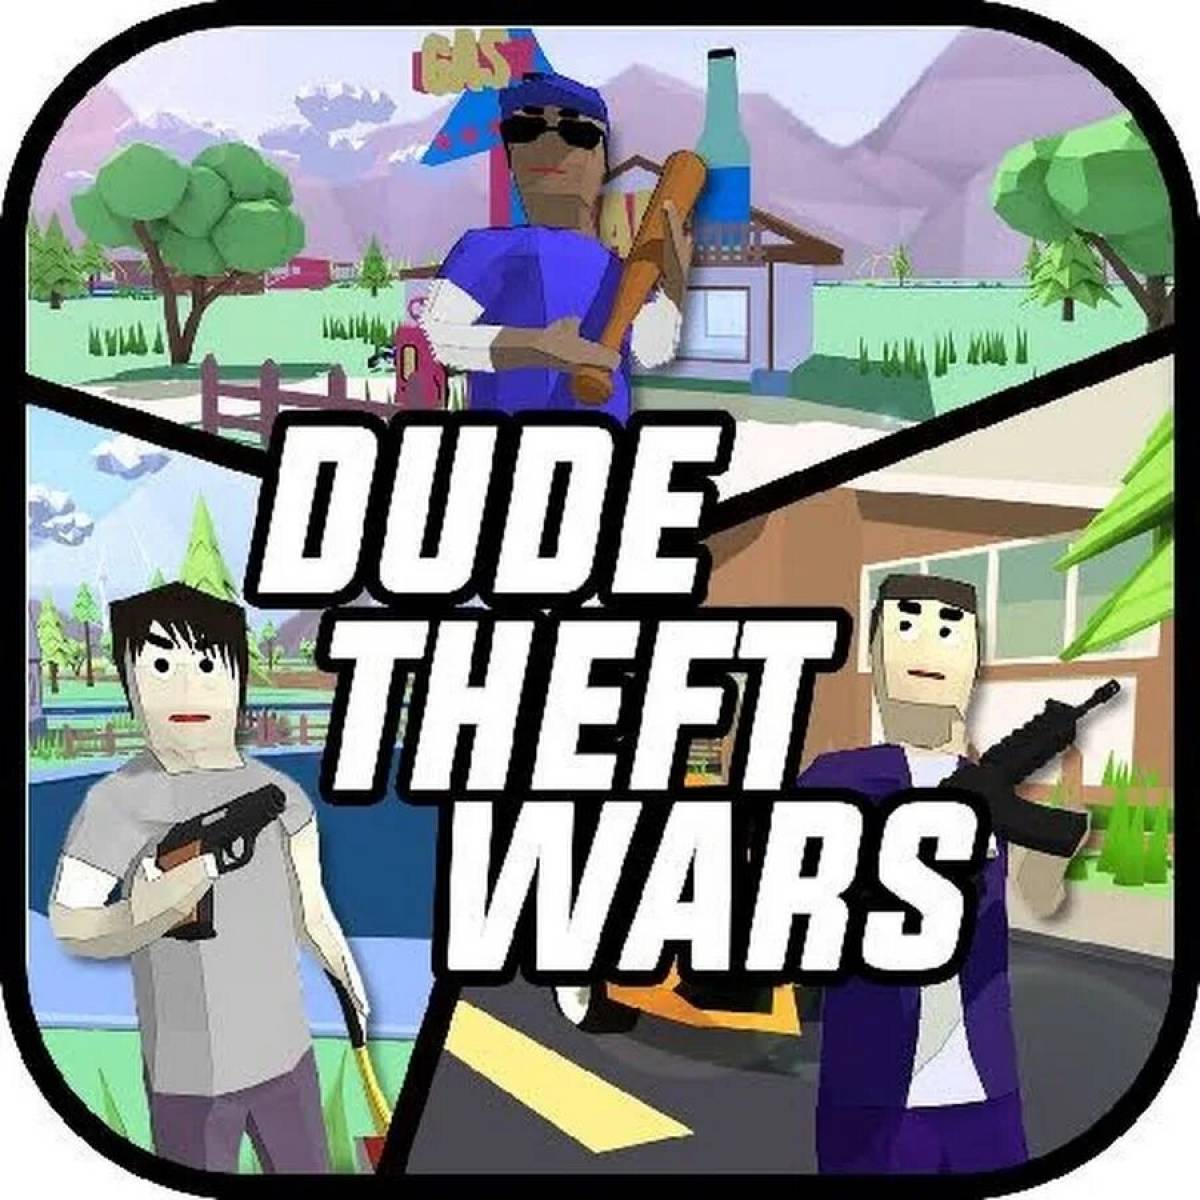 Dude theft wars offline. Dude Theft Wars. Симулятор крутого чувака. Dude Theft Wars картинки. Дуд Зефт ВАРС.